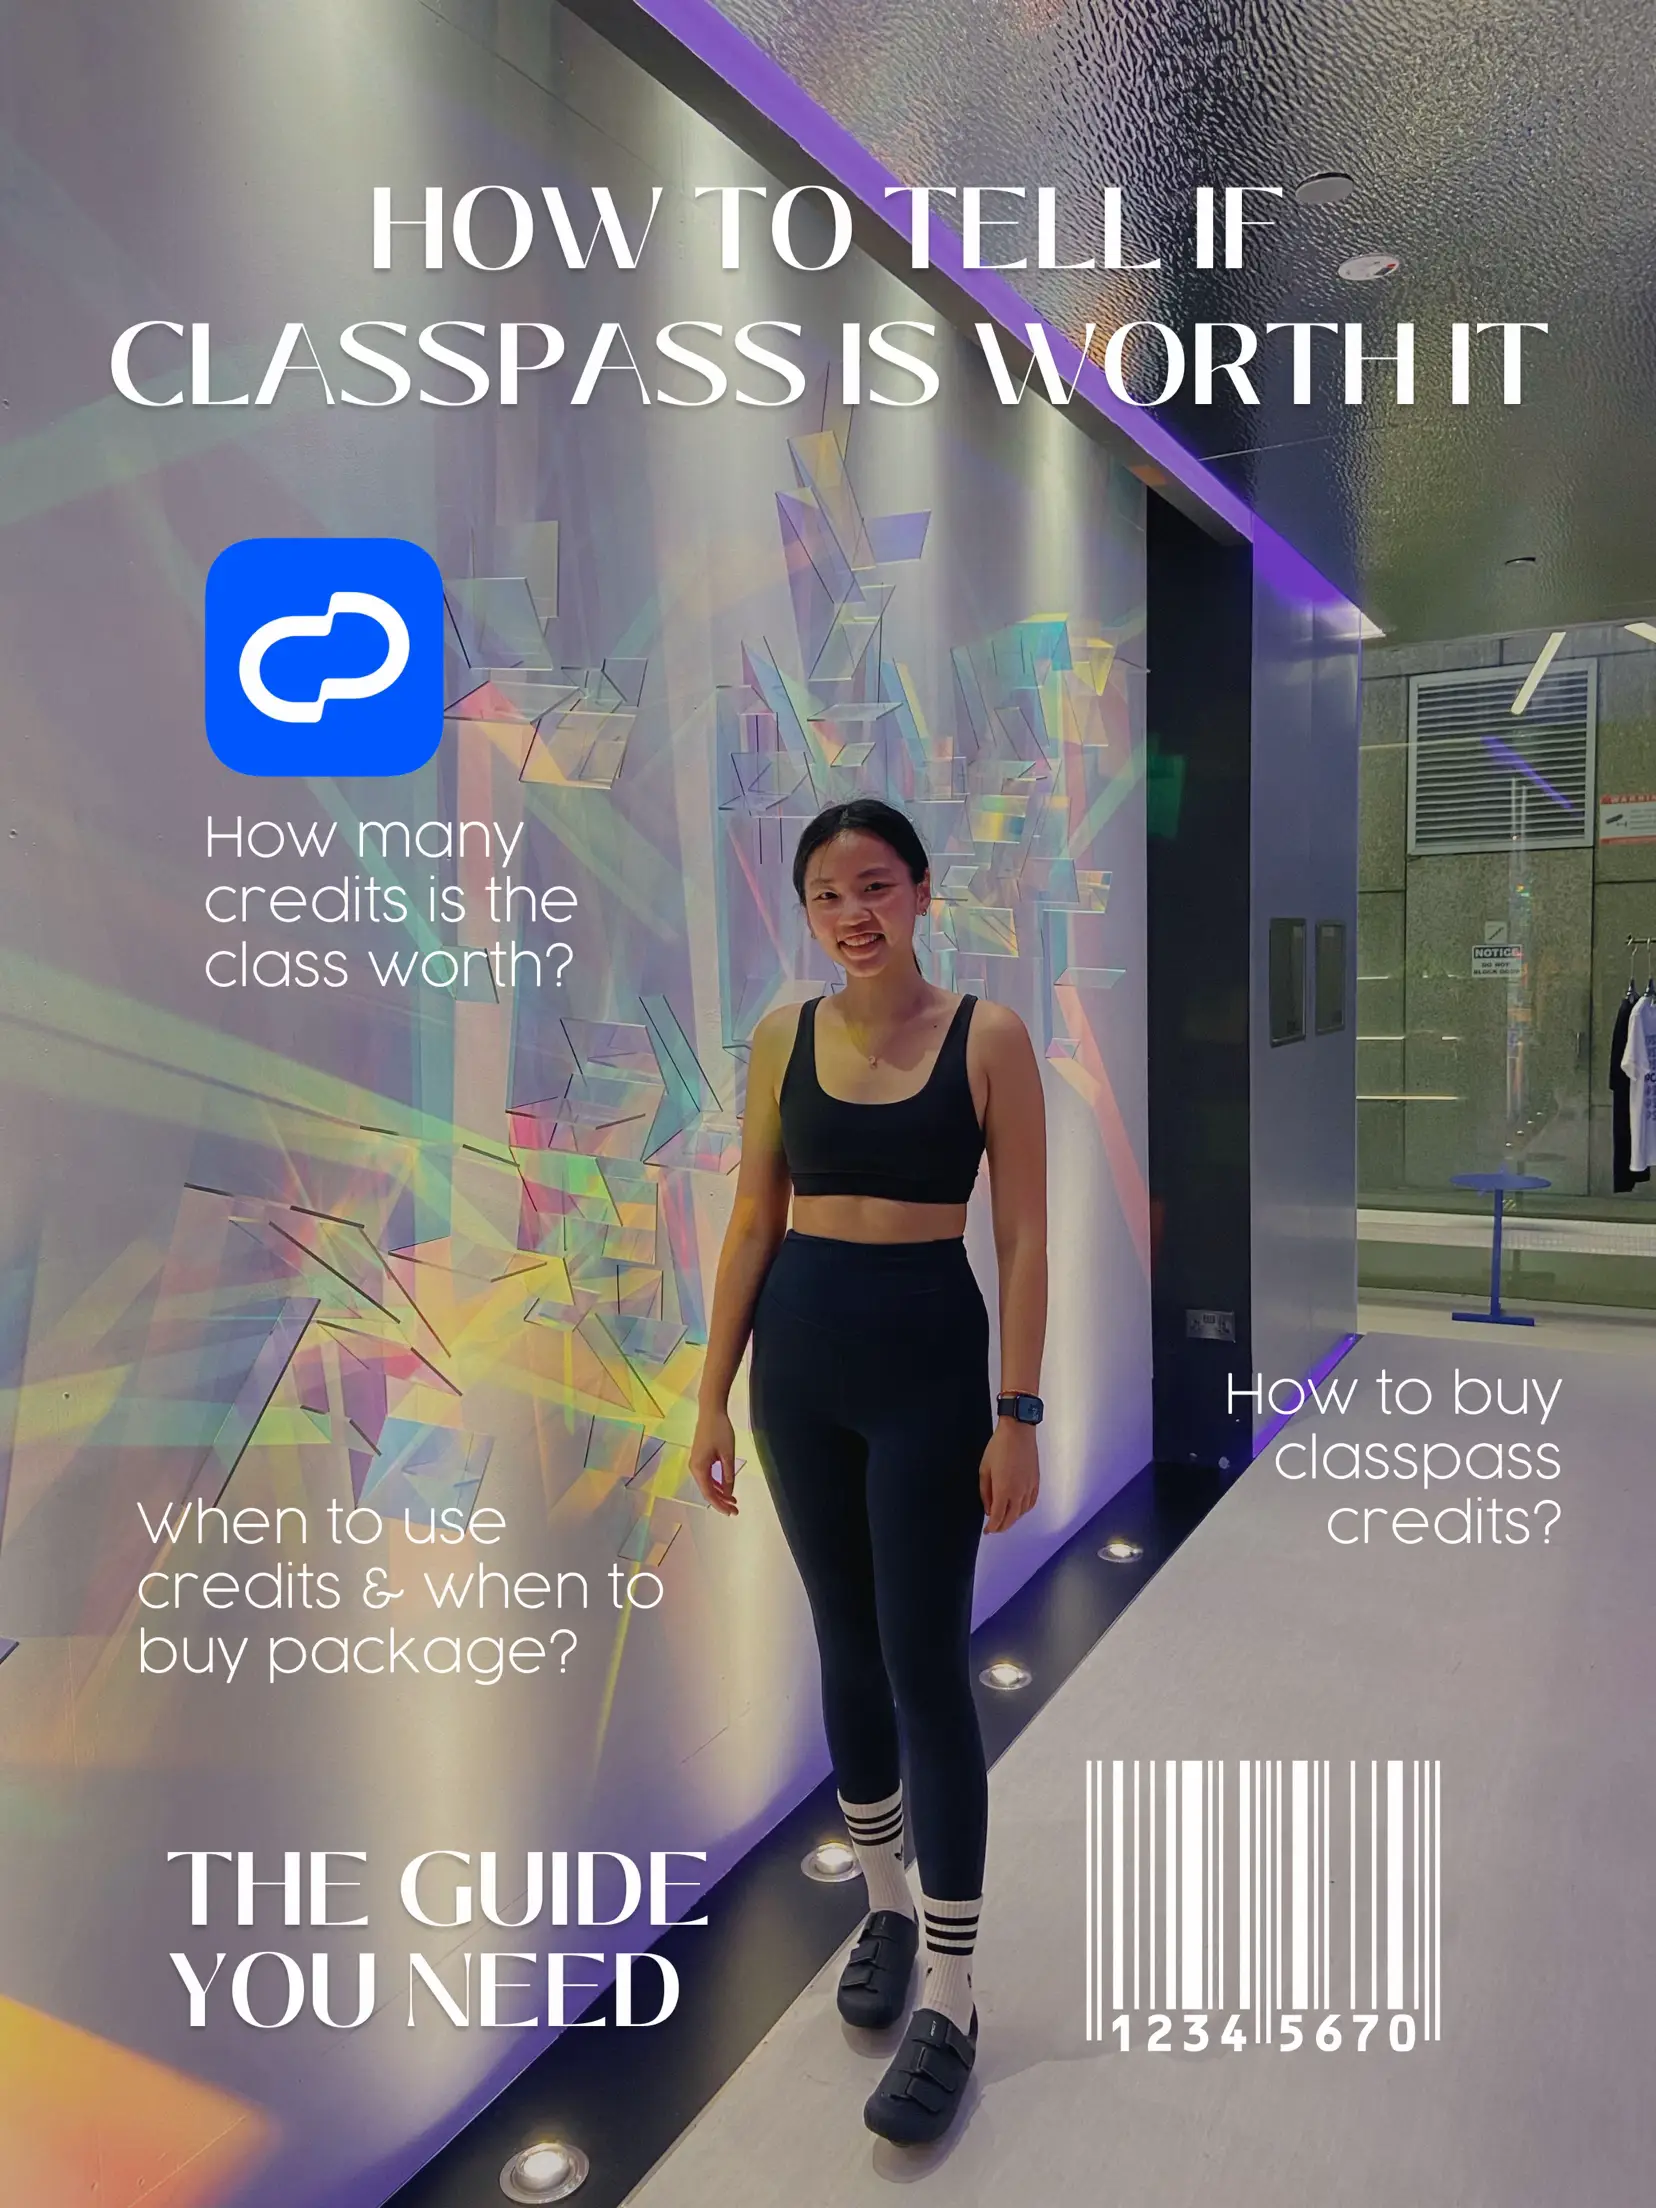 Yoga Pod - Austin: Read Reviews and Book Classes on ClassPass